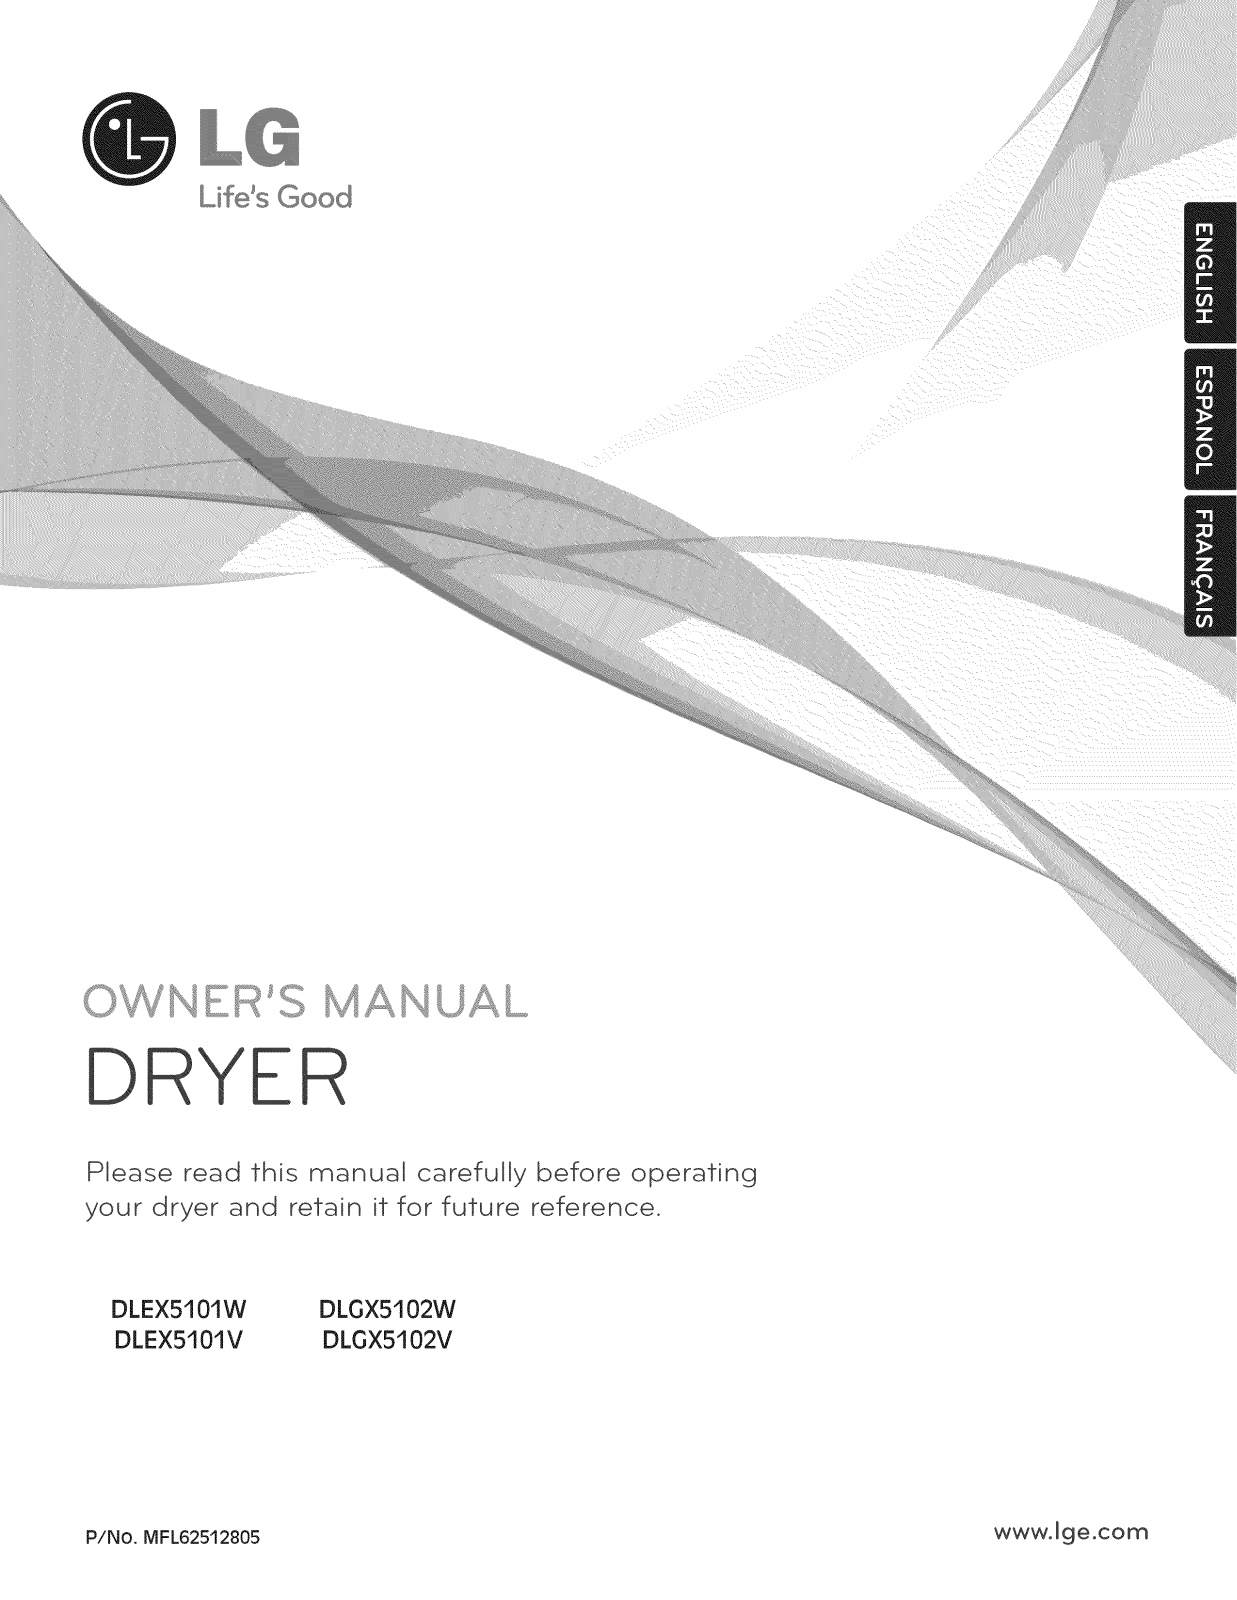 LG DLGX5102W, DLGX5102V, DLEX5101W, DLEX5101V Owner’s Manual